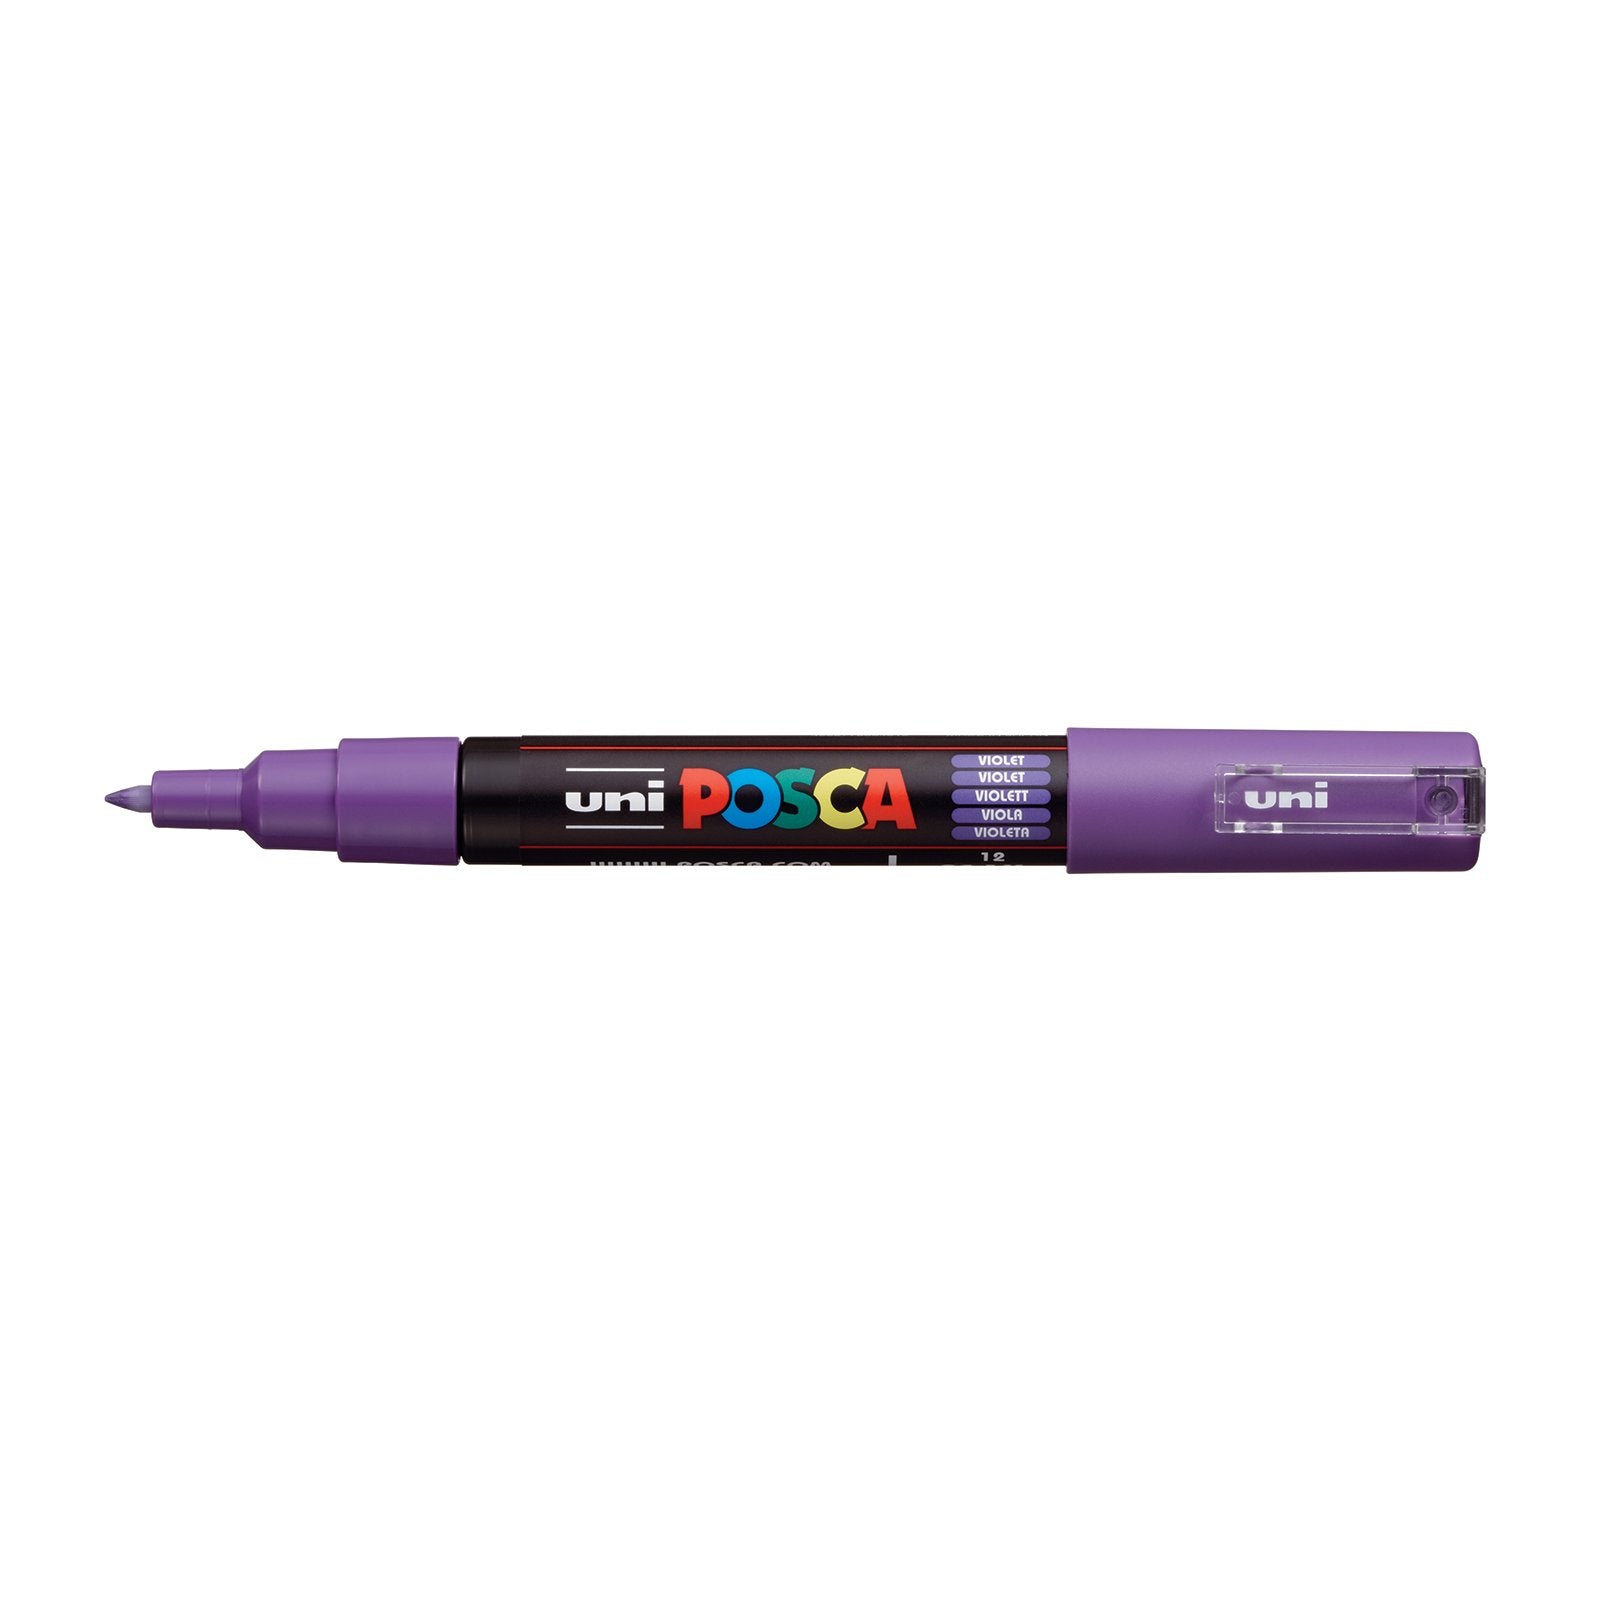 POSCA Acrylic Paint Markers - PC-1M / 0.7mm - Violet by POSCA - K. A. Artist Shop